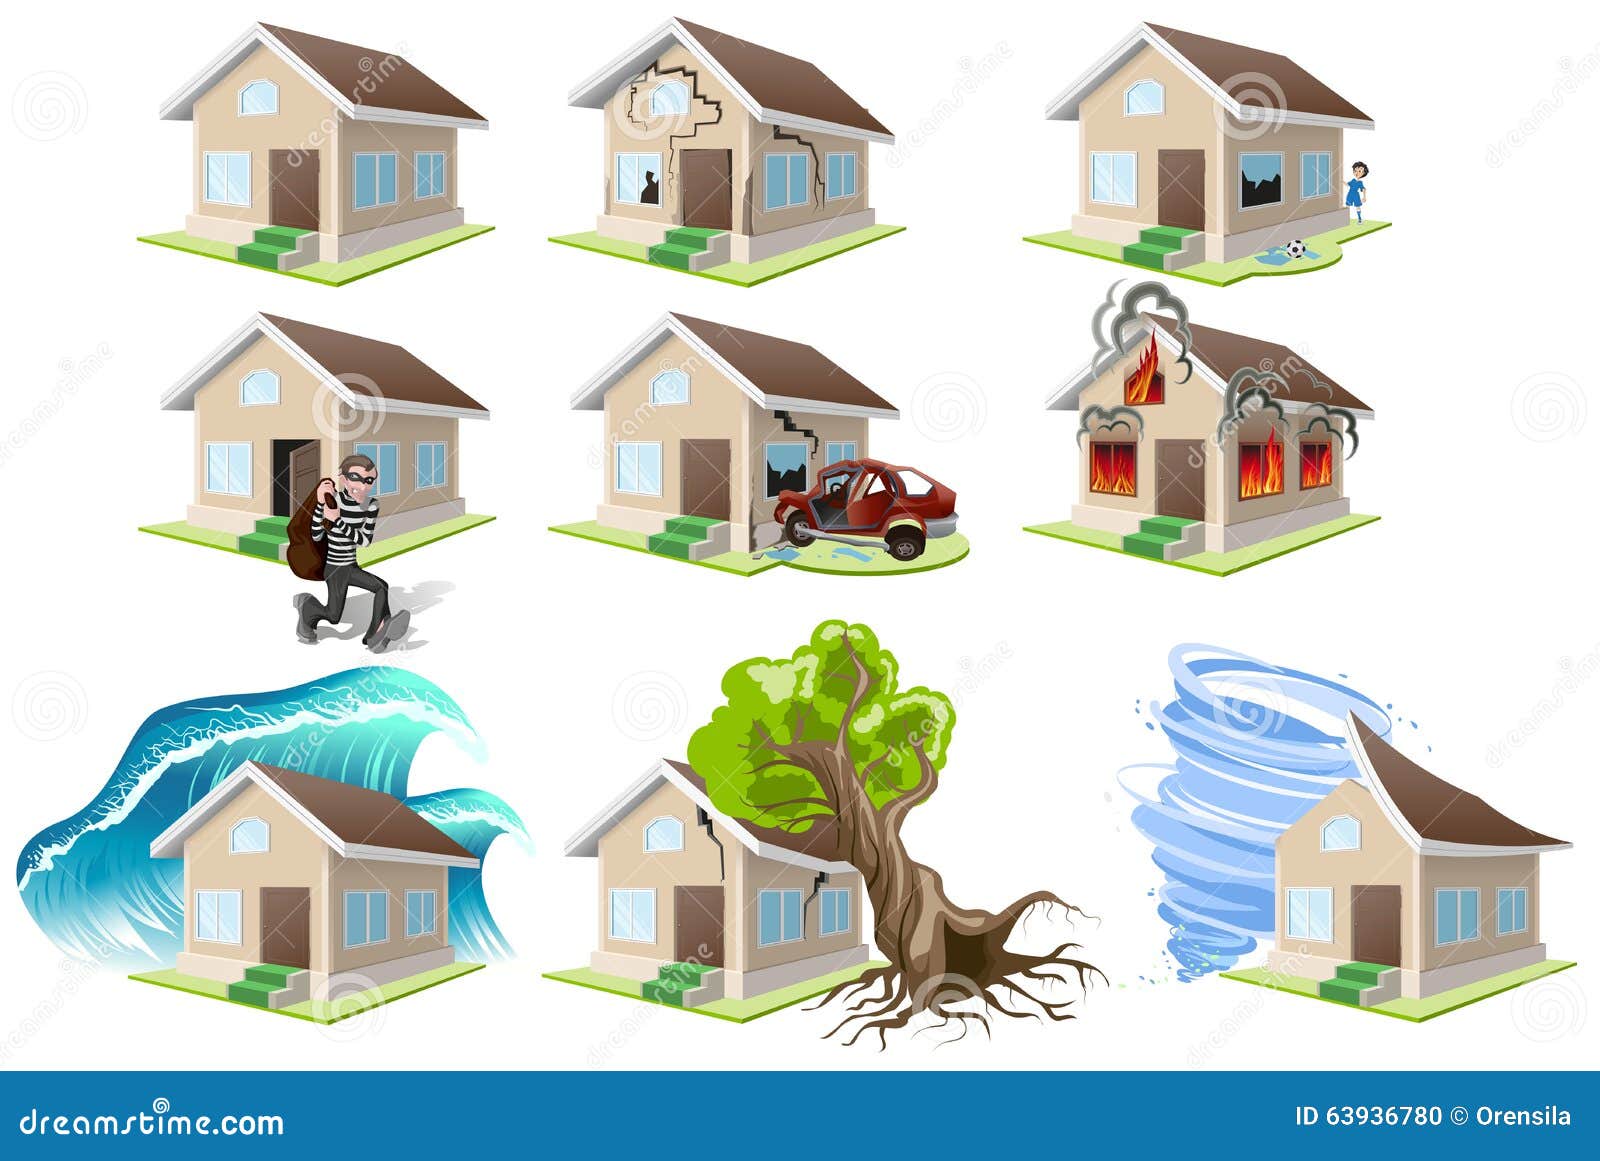 set homes misfortune. house insurance. property insurance